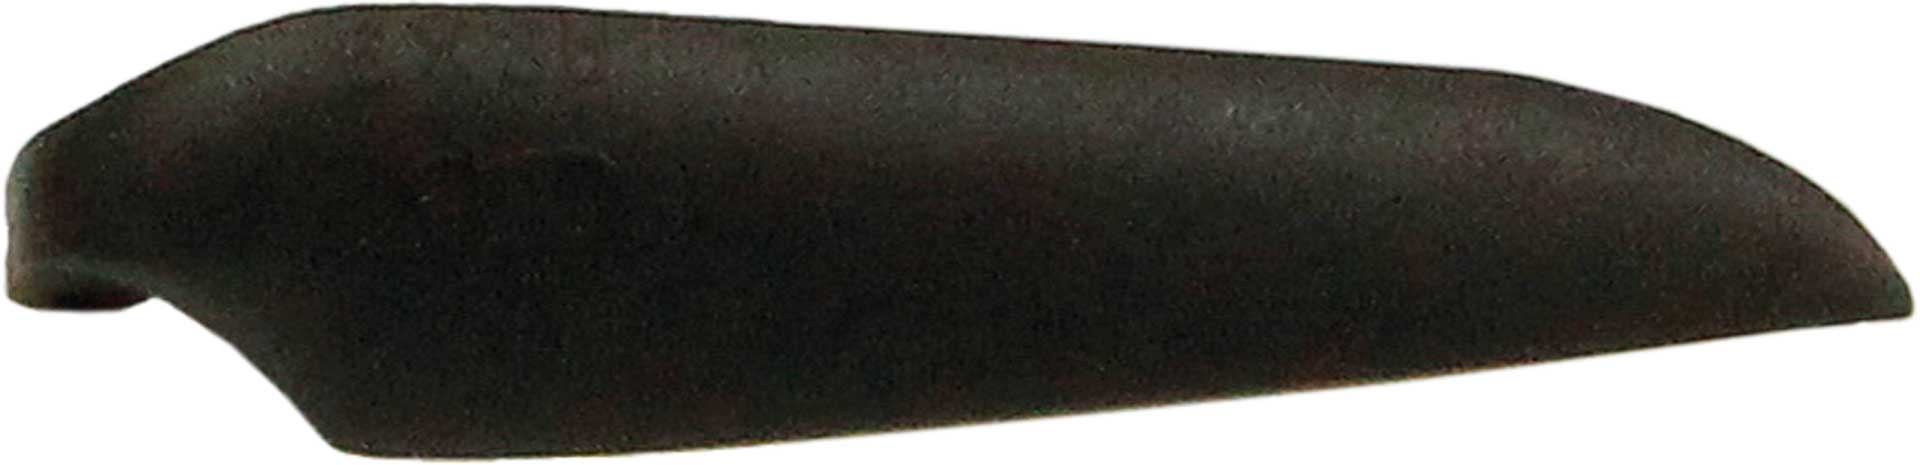 Robbe Modellsport Ersatzblätter 6x3 Kunststoff, 5mm Wurzel